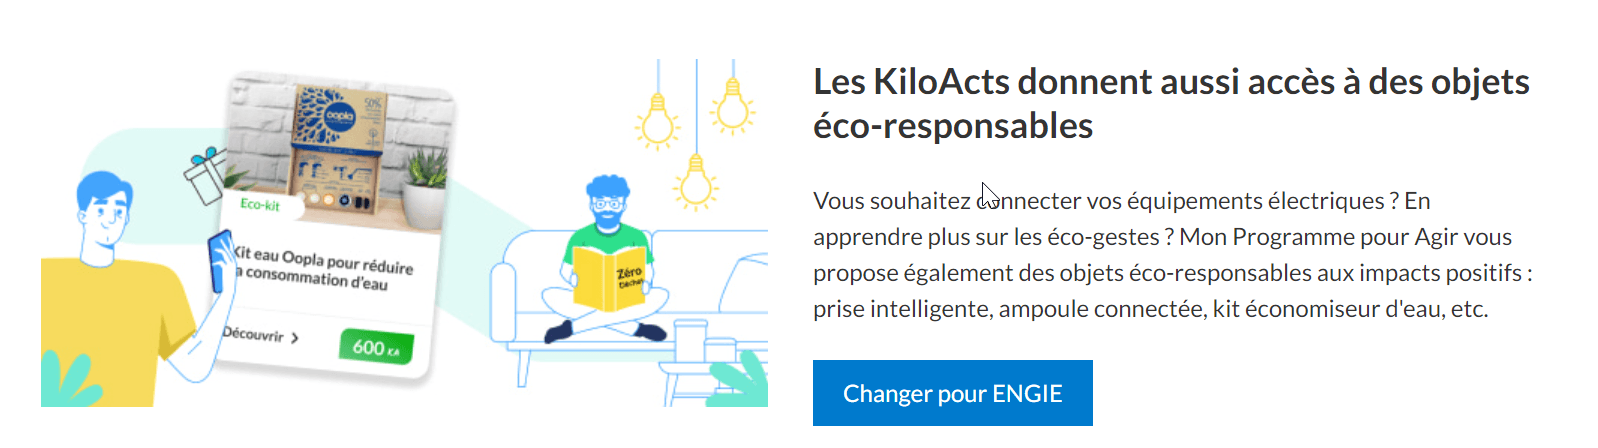 Engie-Mon_programme_pour_agir-Kiloacts